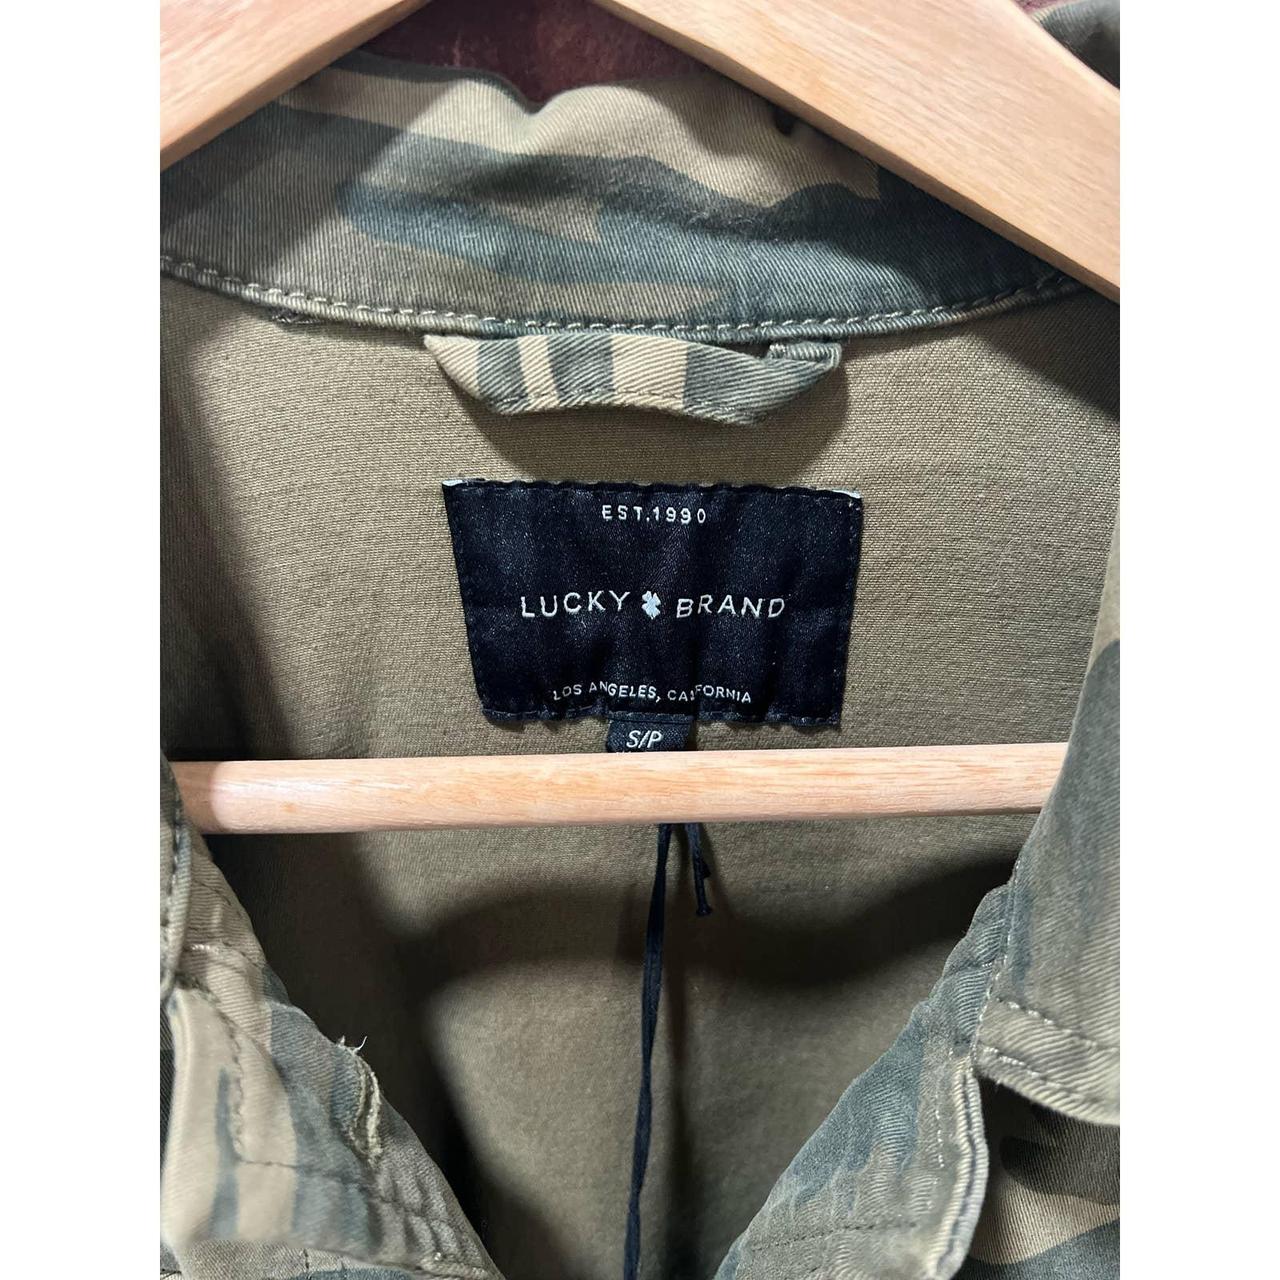 Camo Lucky Brand Jacket (Size M) 110 DOLLARS BRAND - Depop